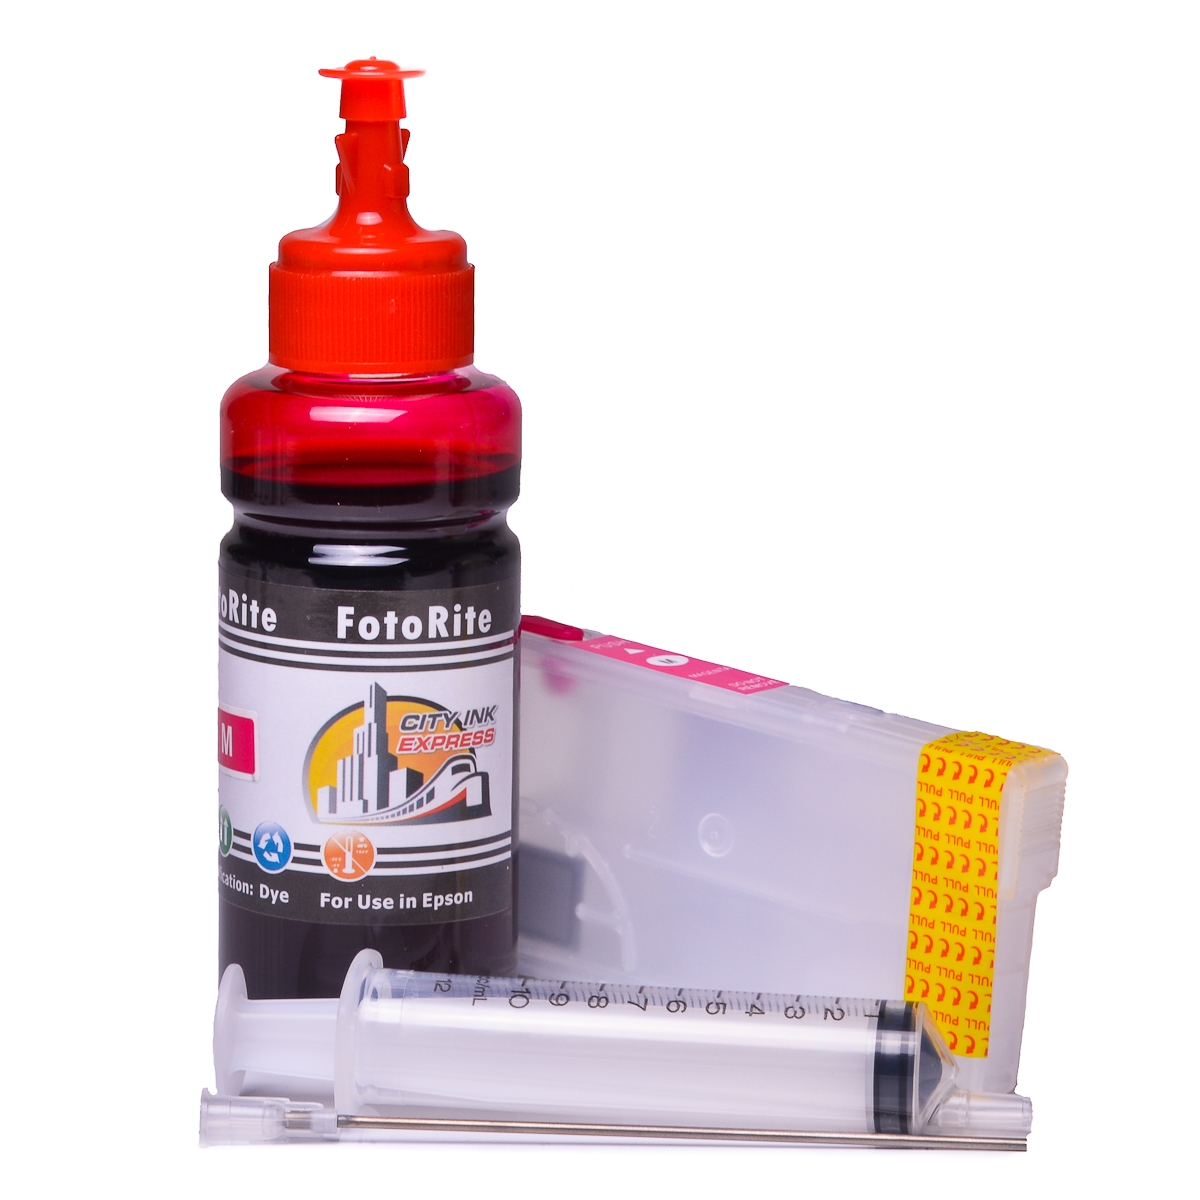 Refillable T3583 - C13T35834010 Magenta Cheap printer cartridges for Epson WF-4720DWF T3593 - C13T35934010 dye ink